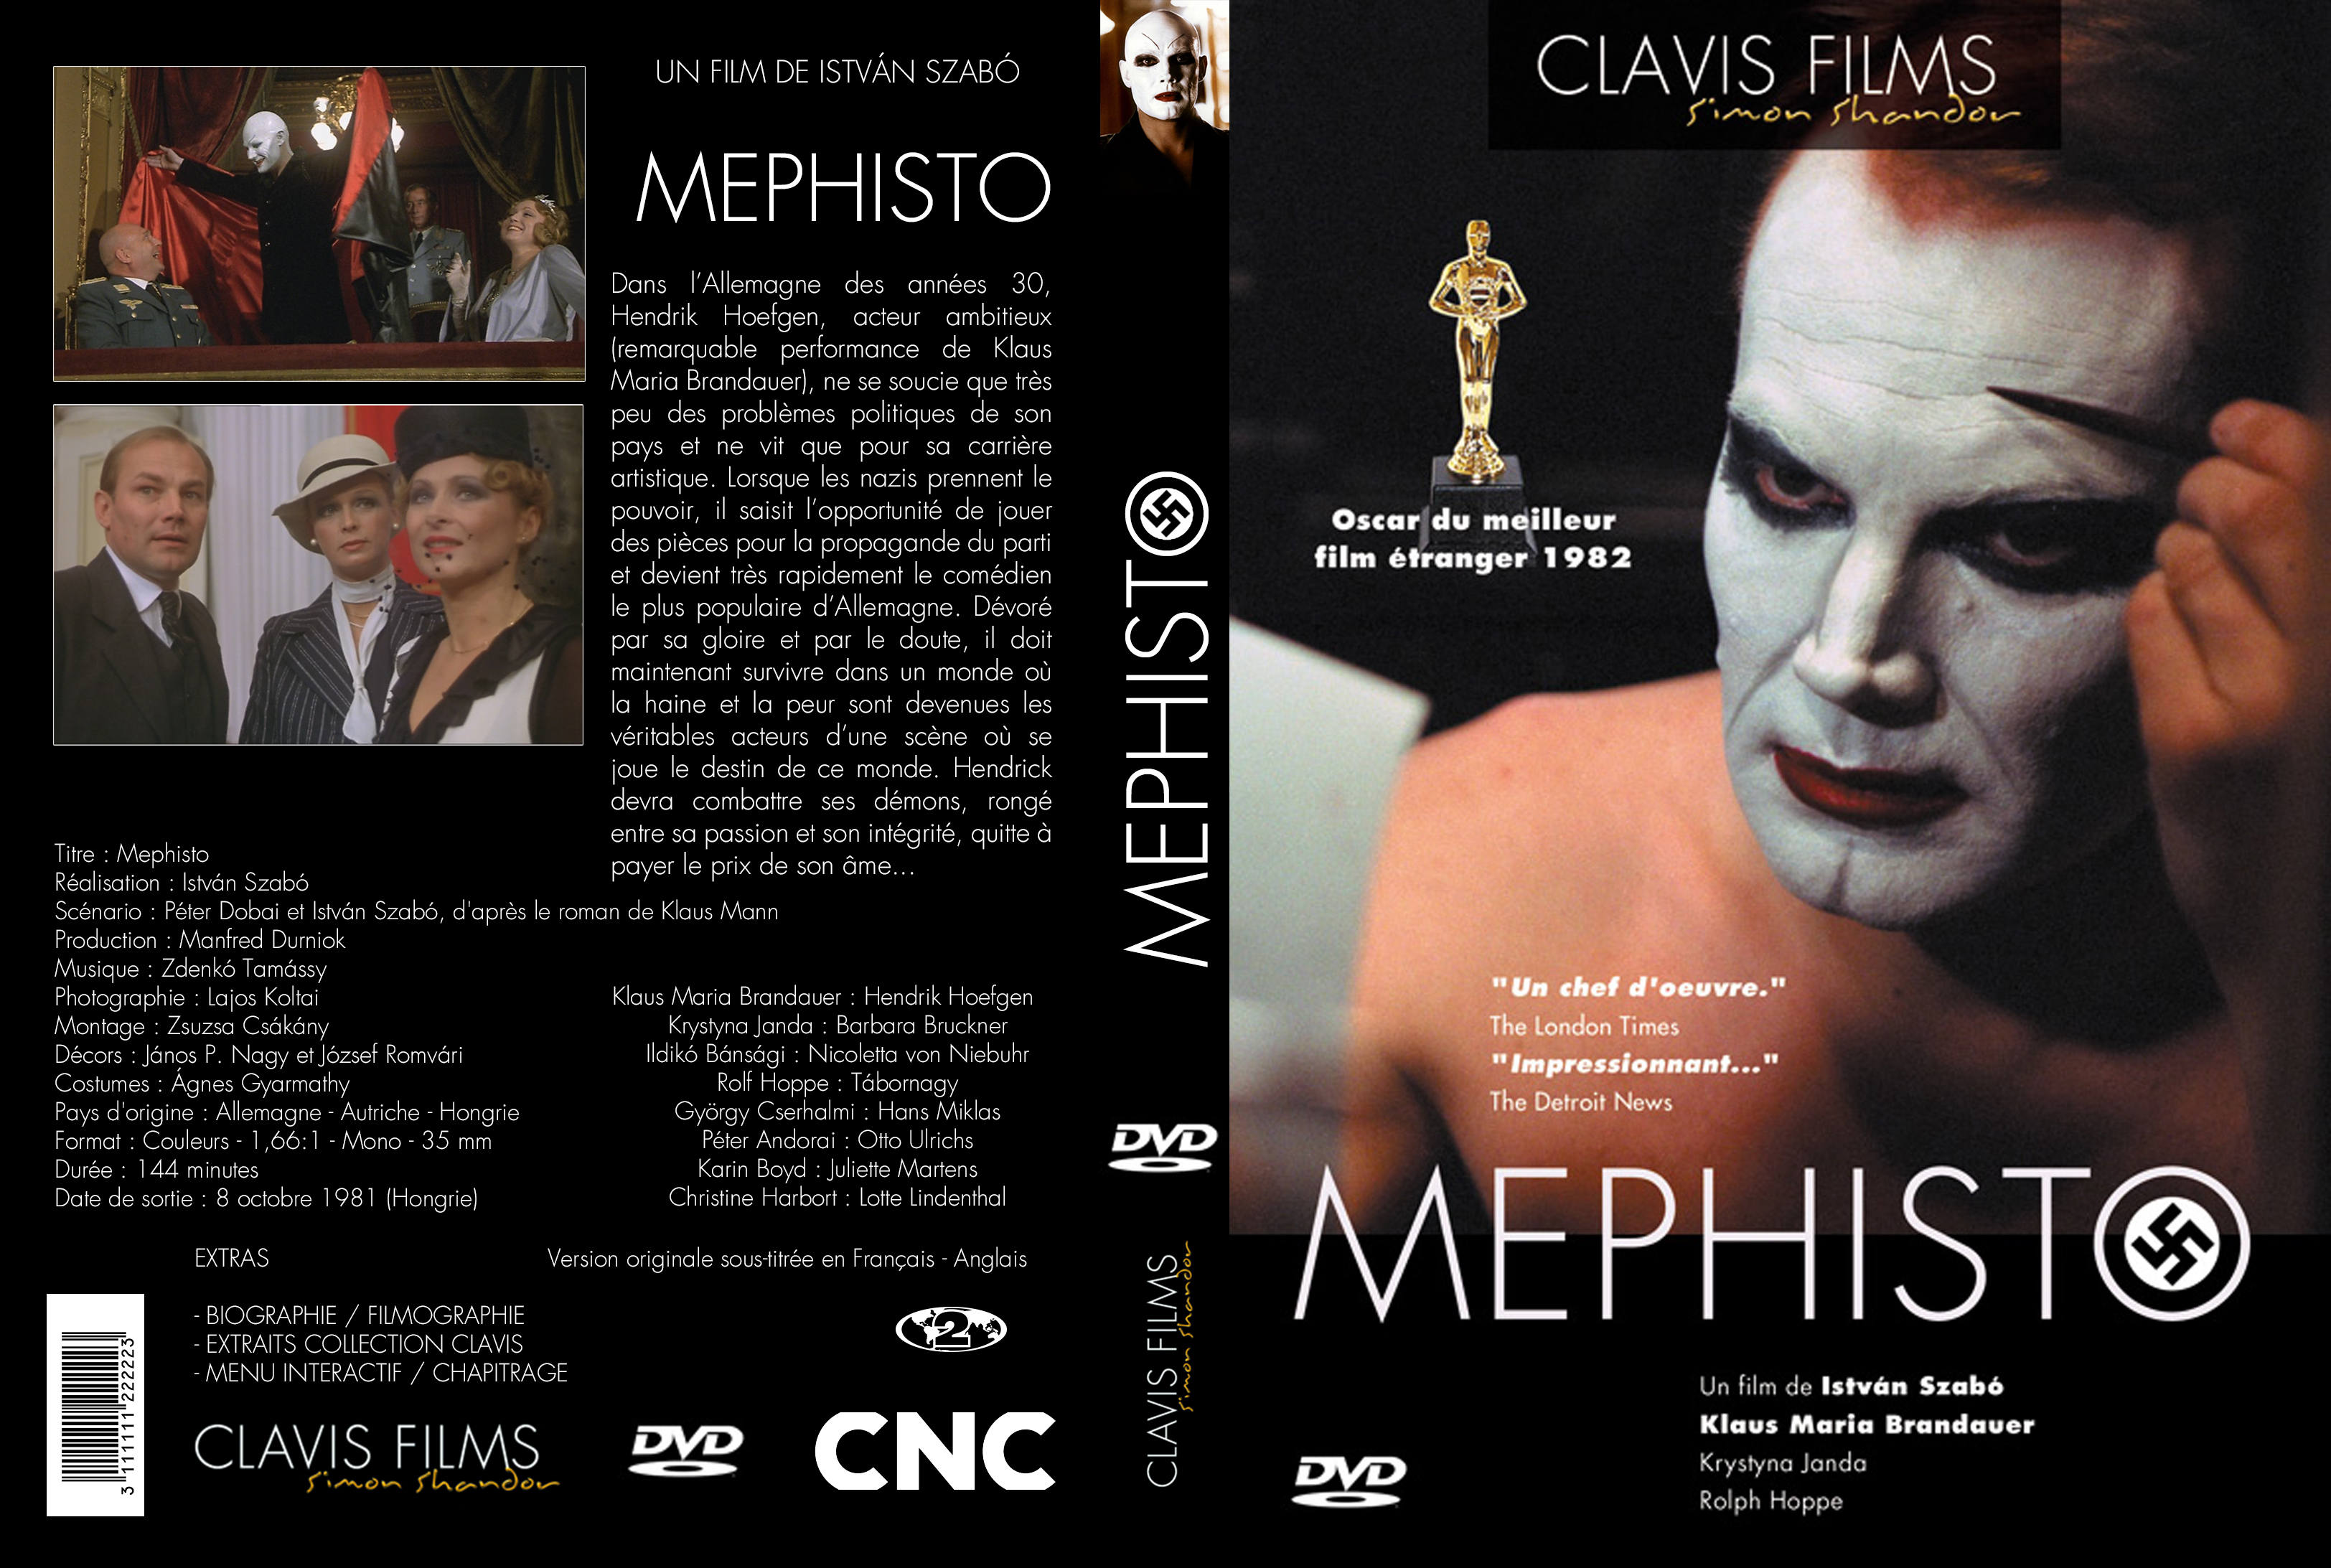 Jaquette DVD Mephisto custom